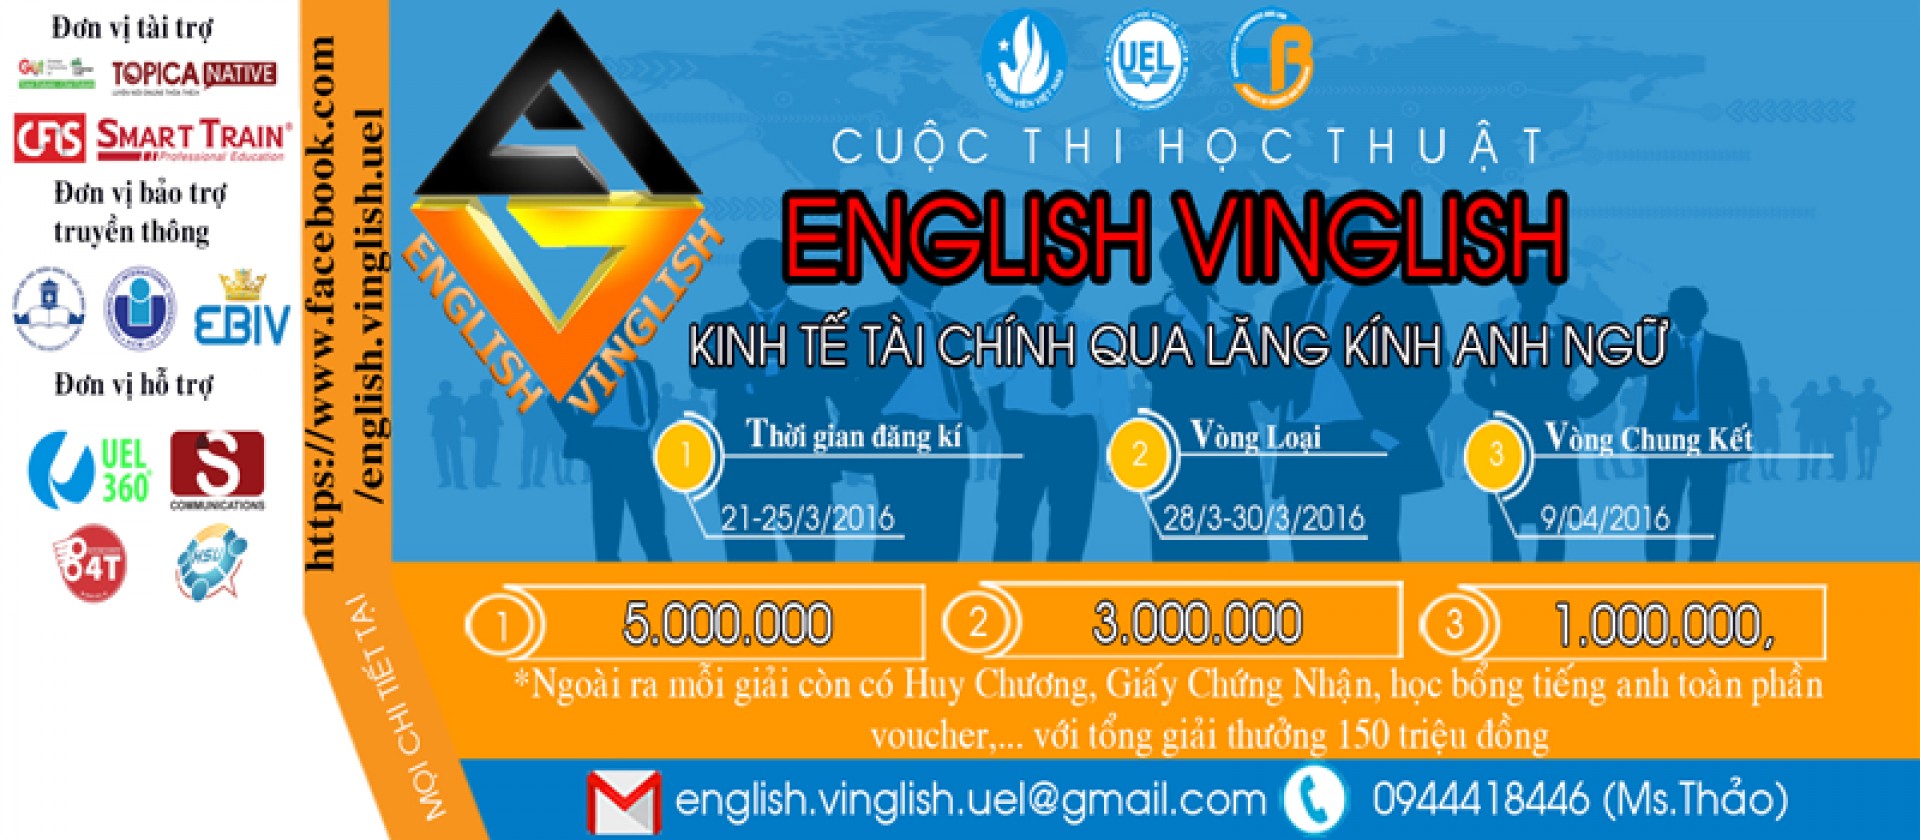 Chung kết English Vinglish